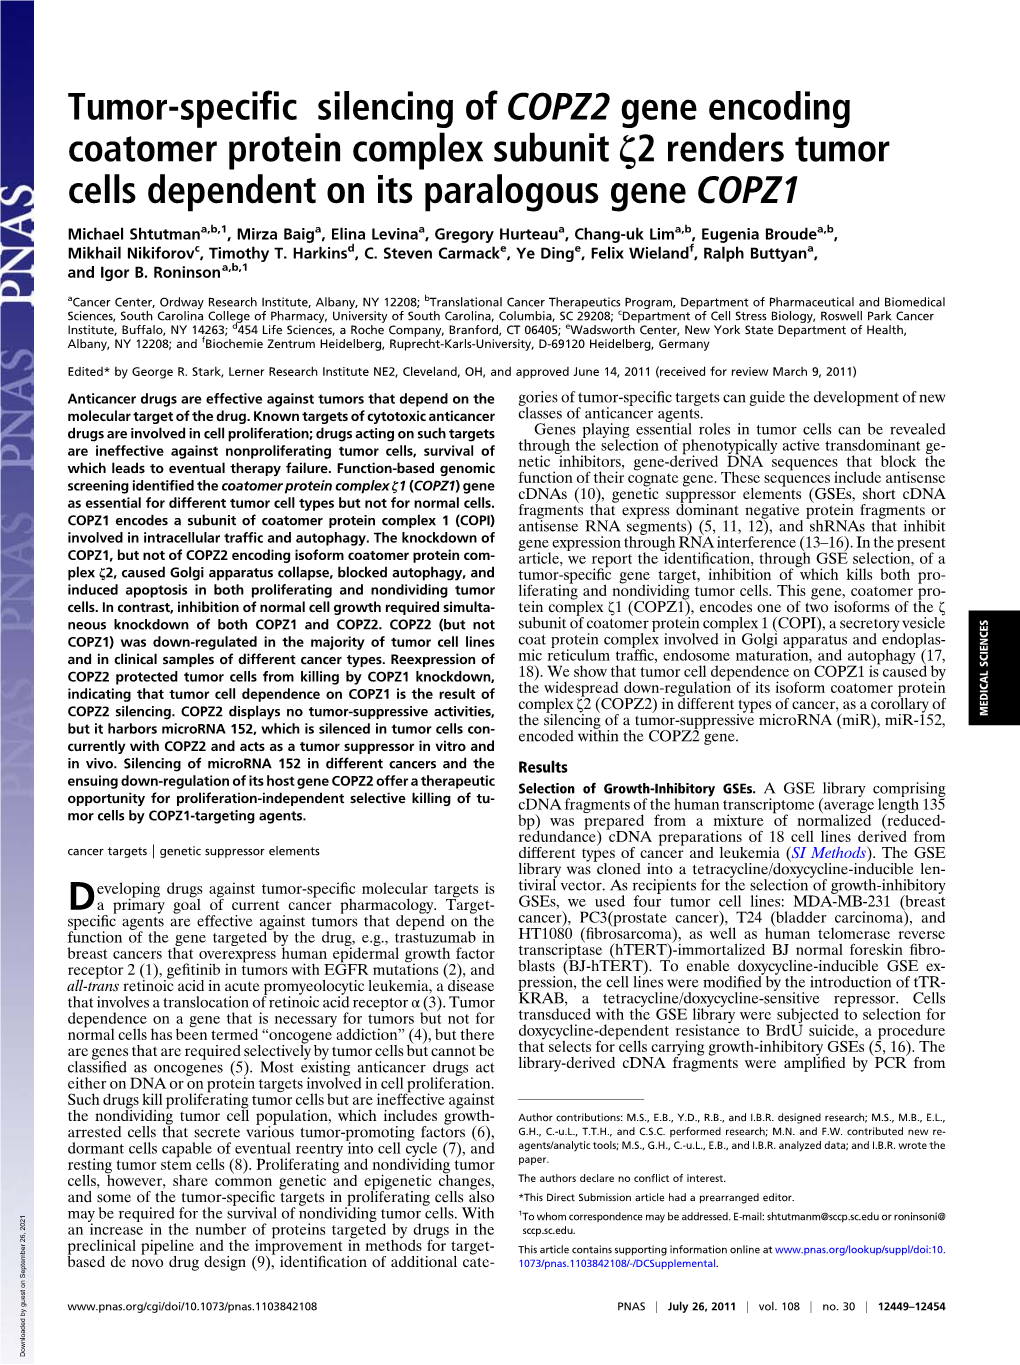 Tumor-Specific Silencing of COPZ2 Gene Encoding Coatomer Protein